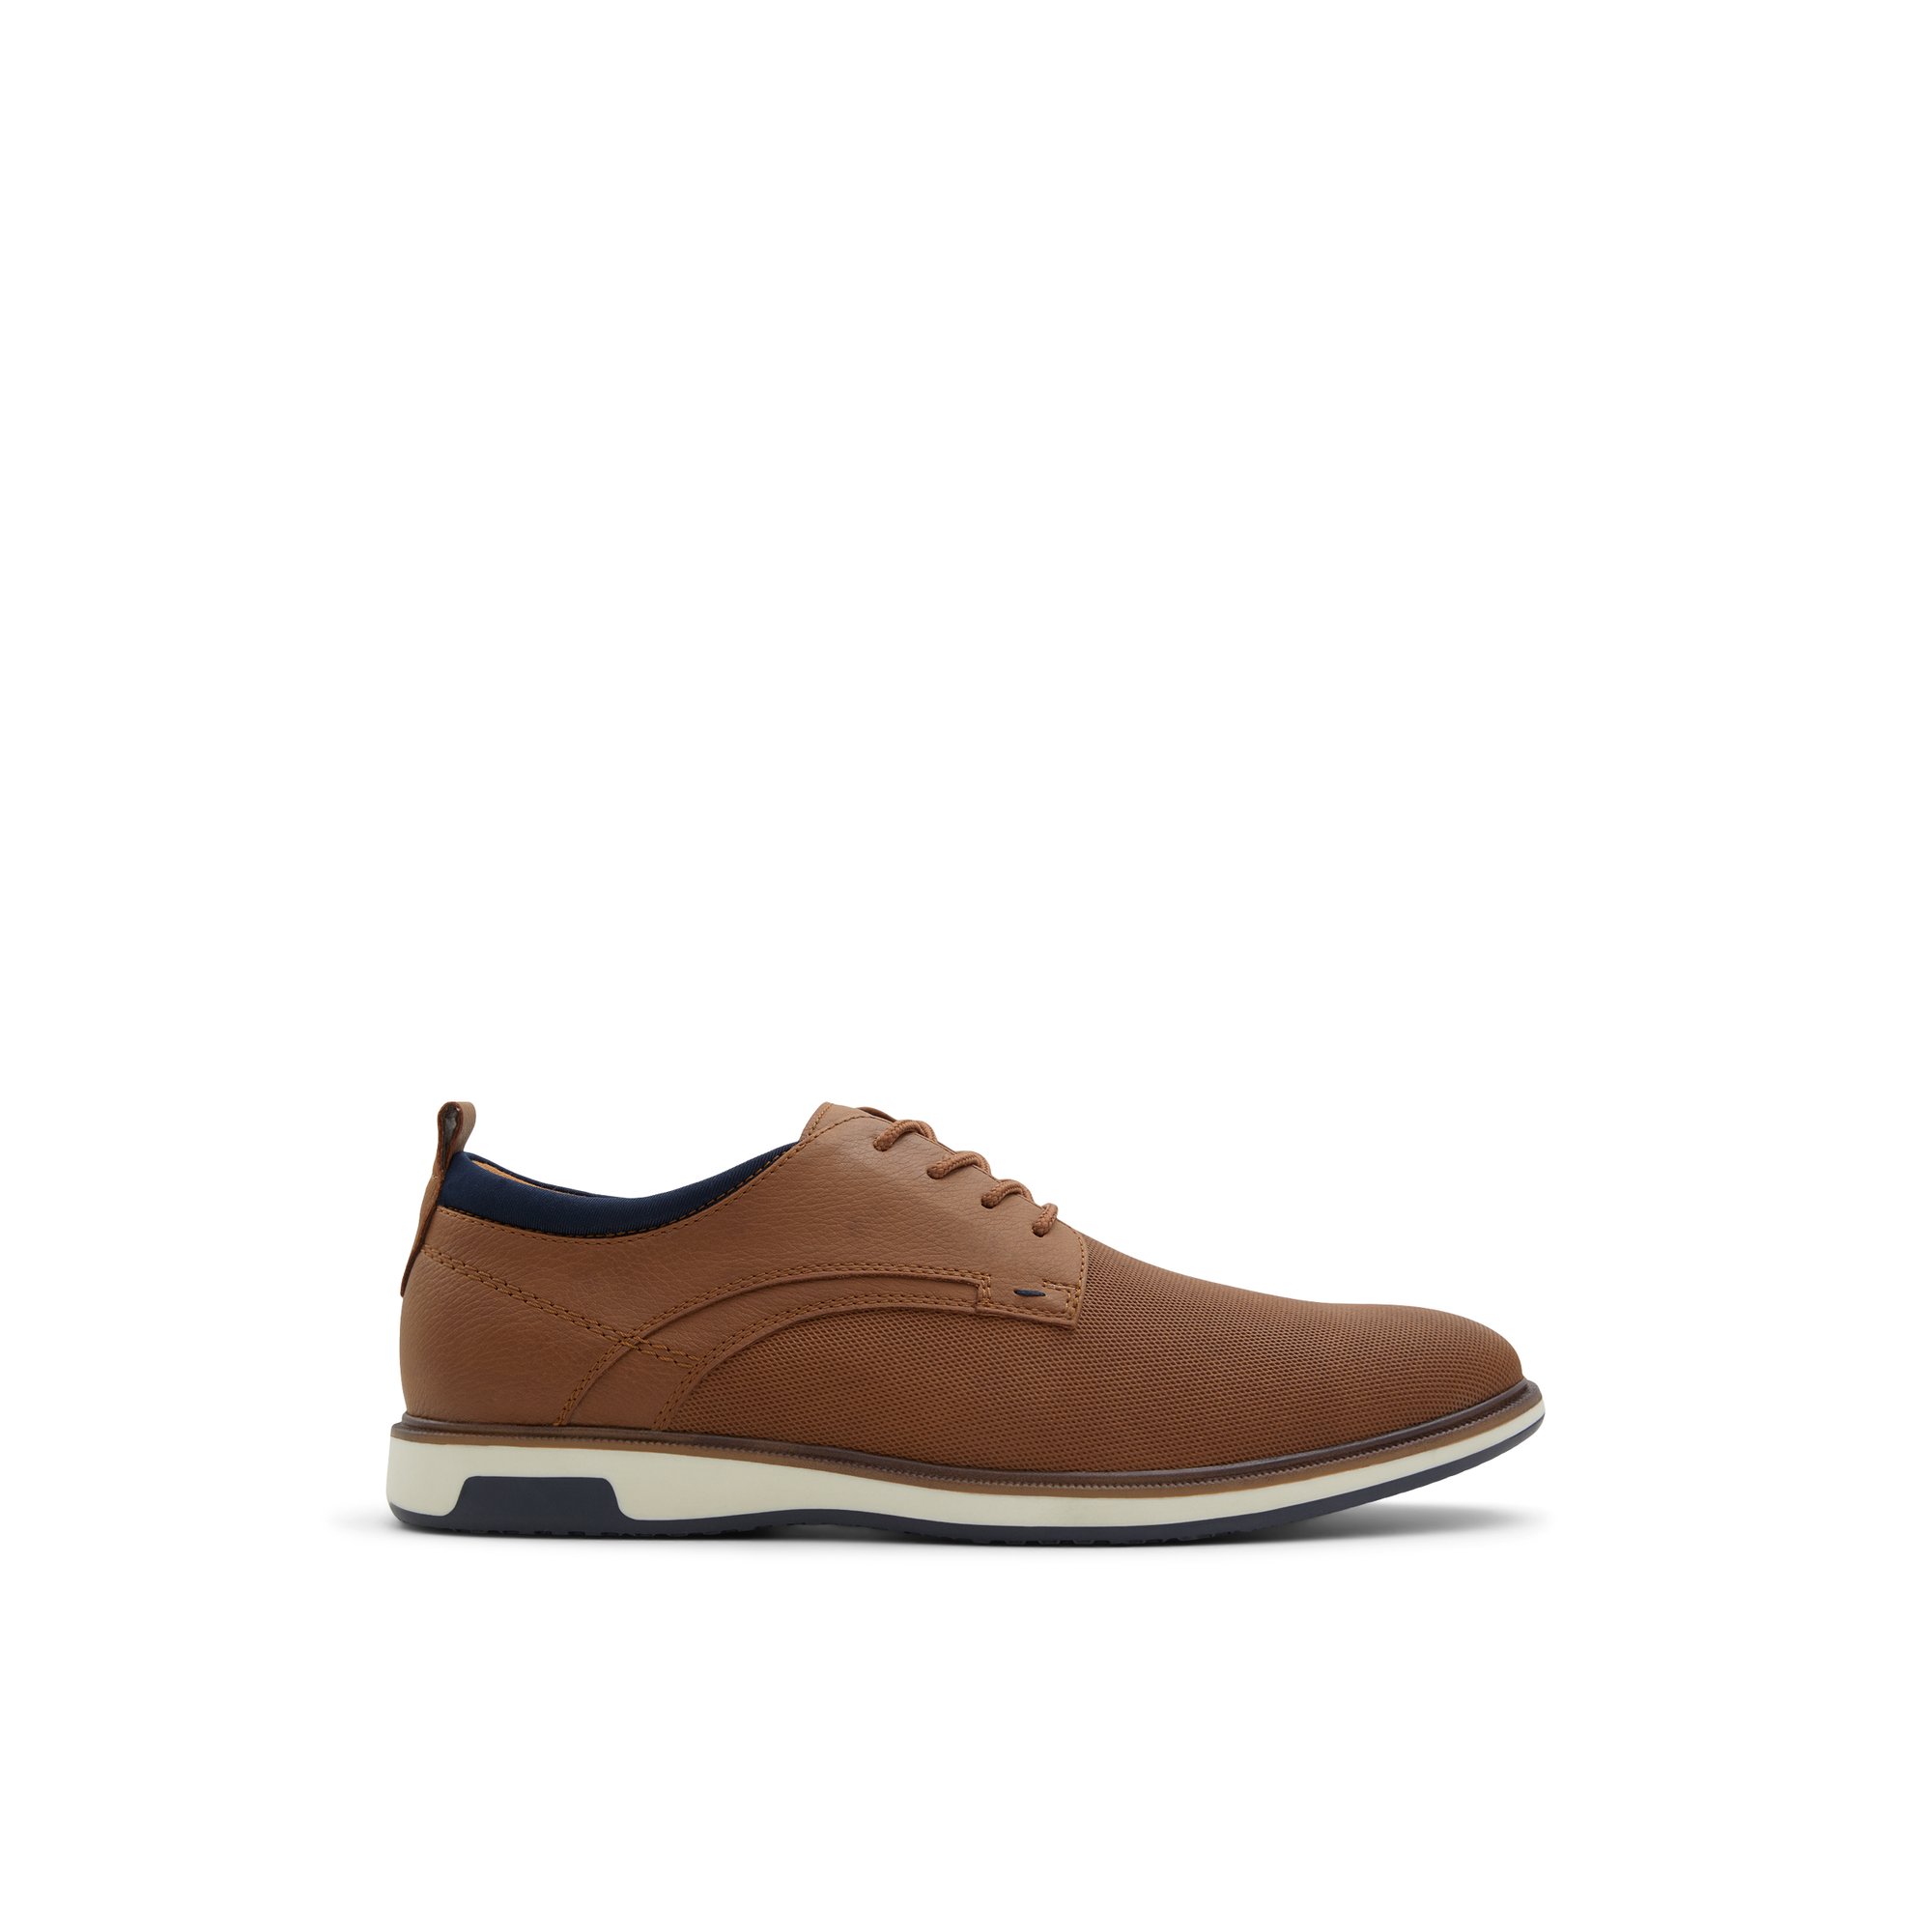 ALDO Karson - Men's Casual Shoes - Brown